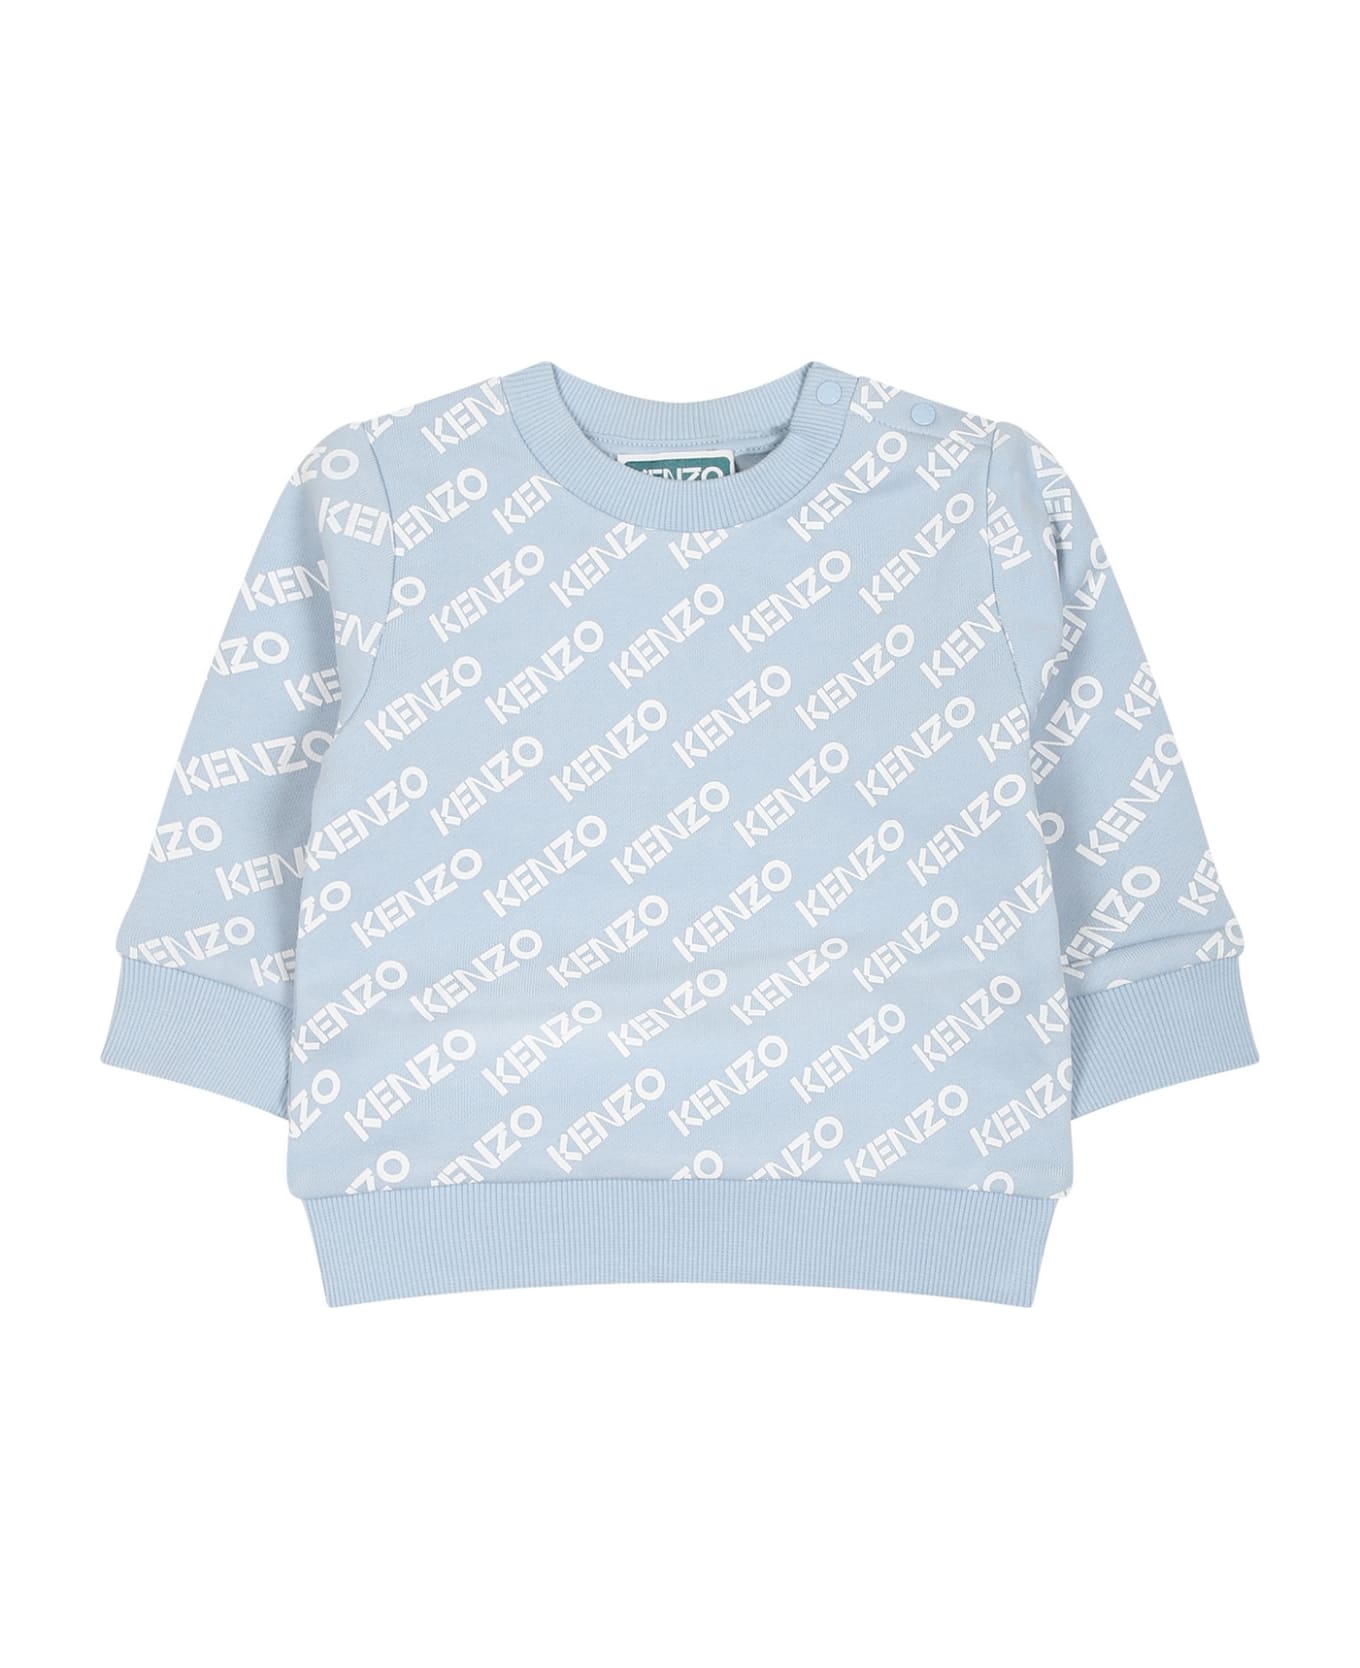 Kenzo Kids Light Blue Sweatshirt For Baby Boy With Logo - Light Blue